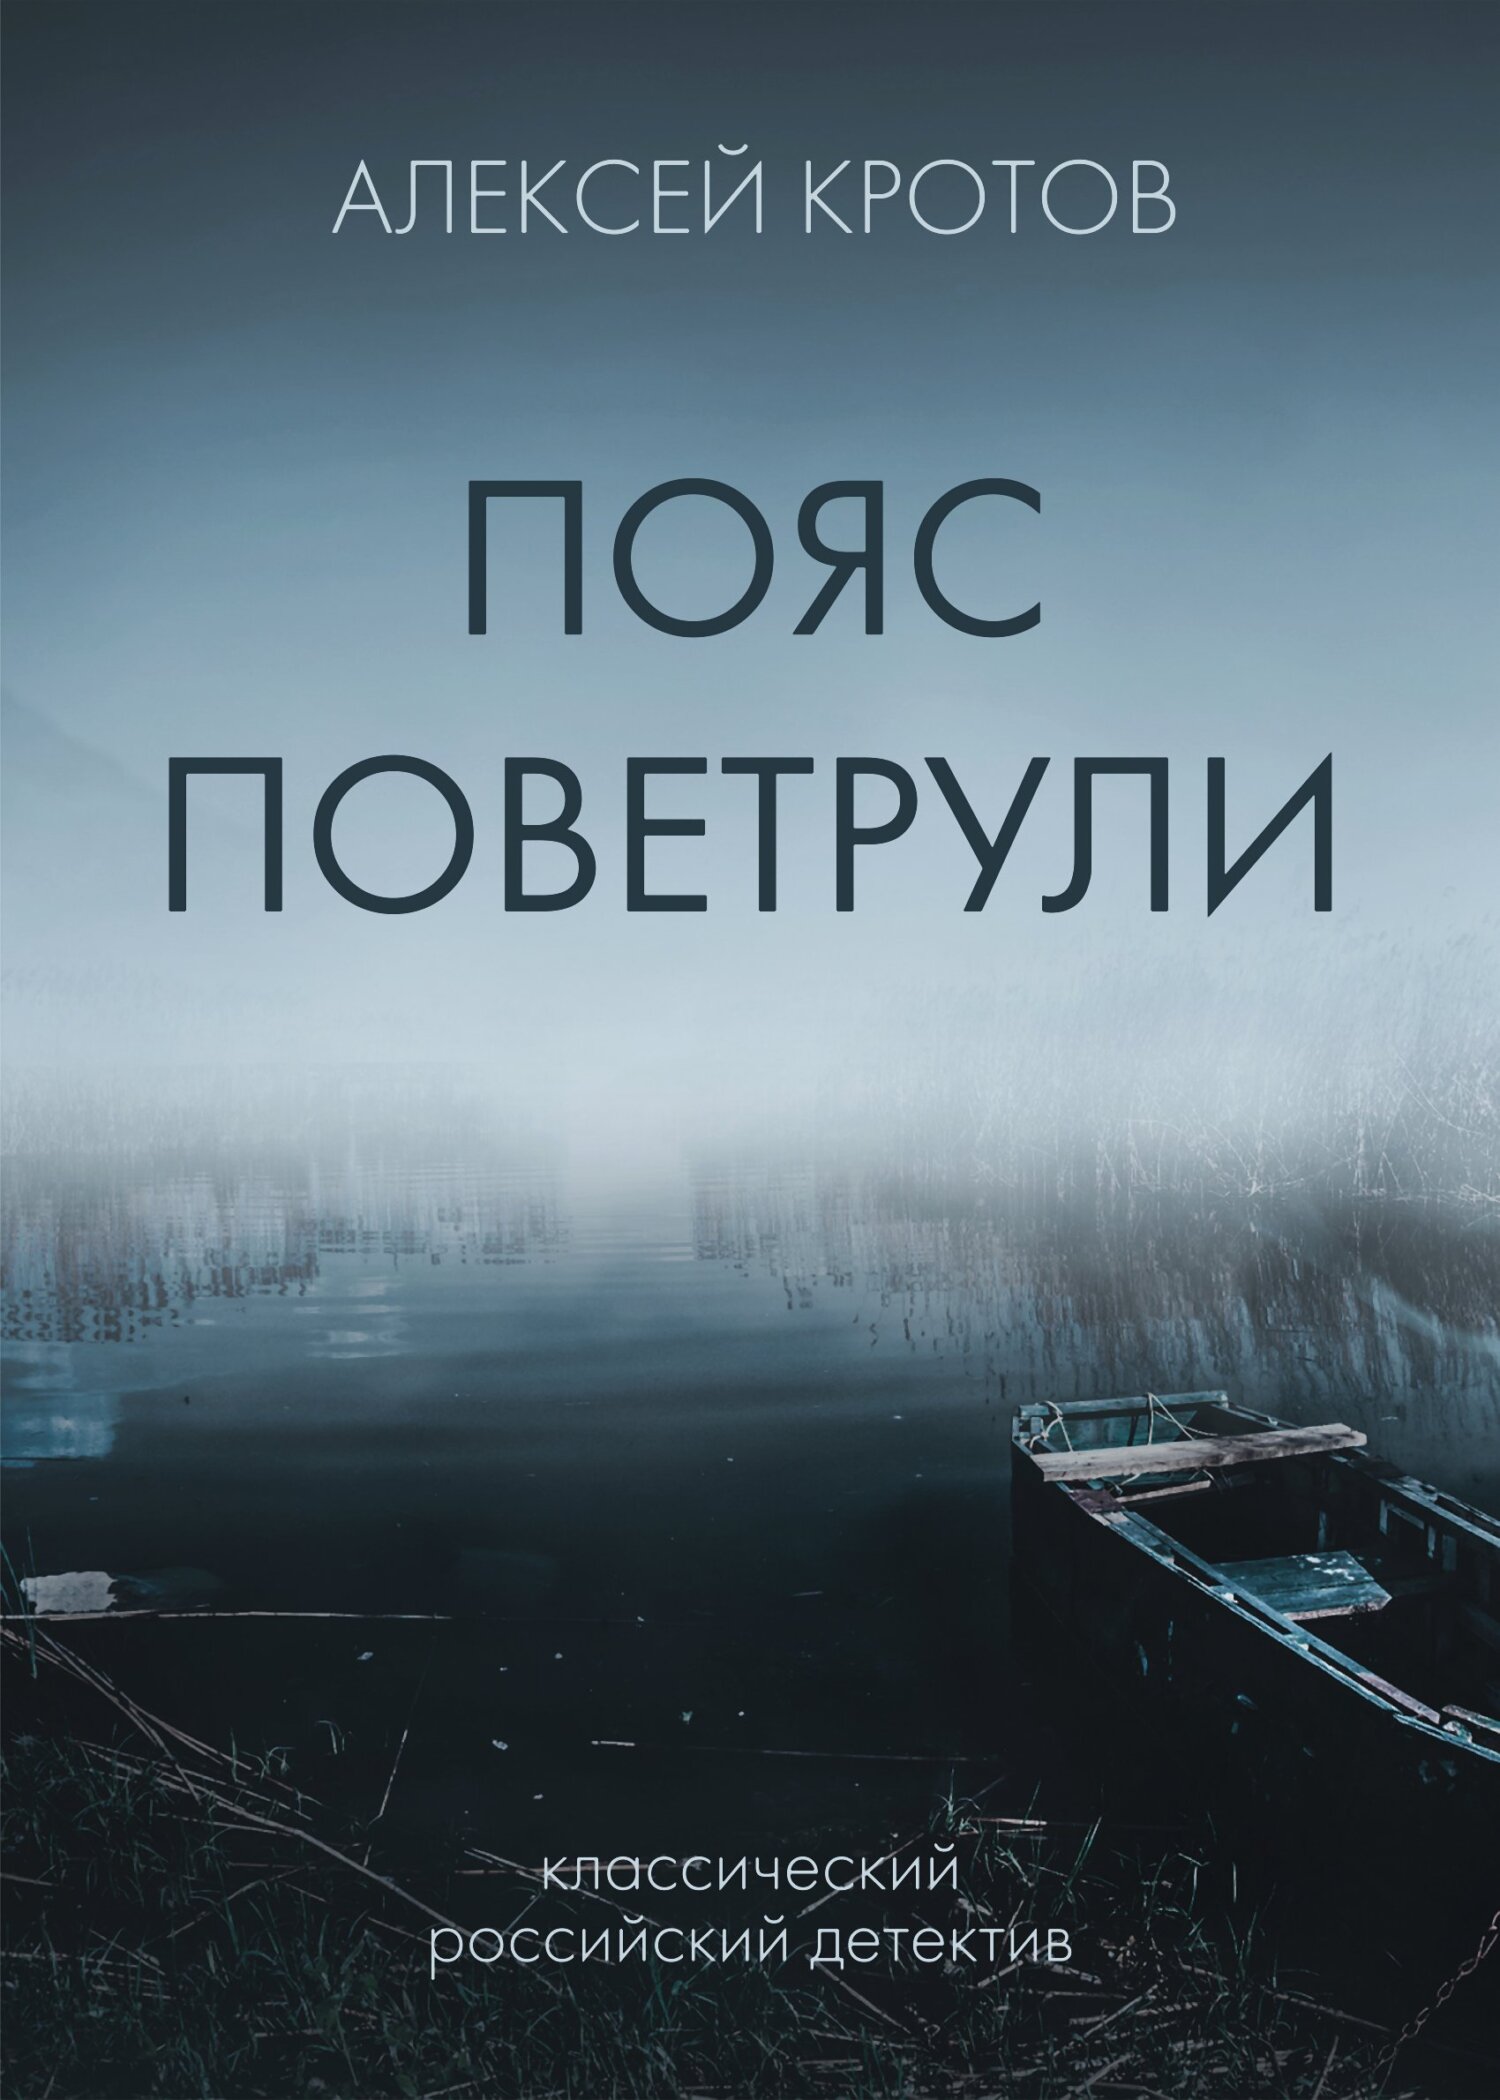 Пояс Поветрули - Алексей Александрович Кротов